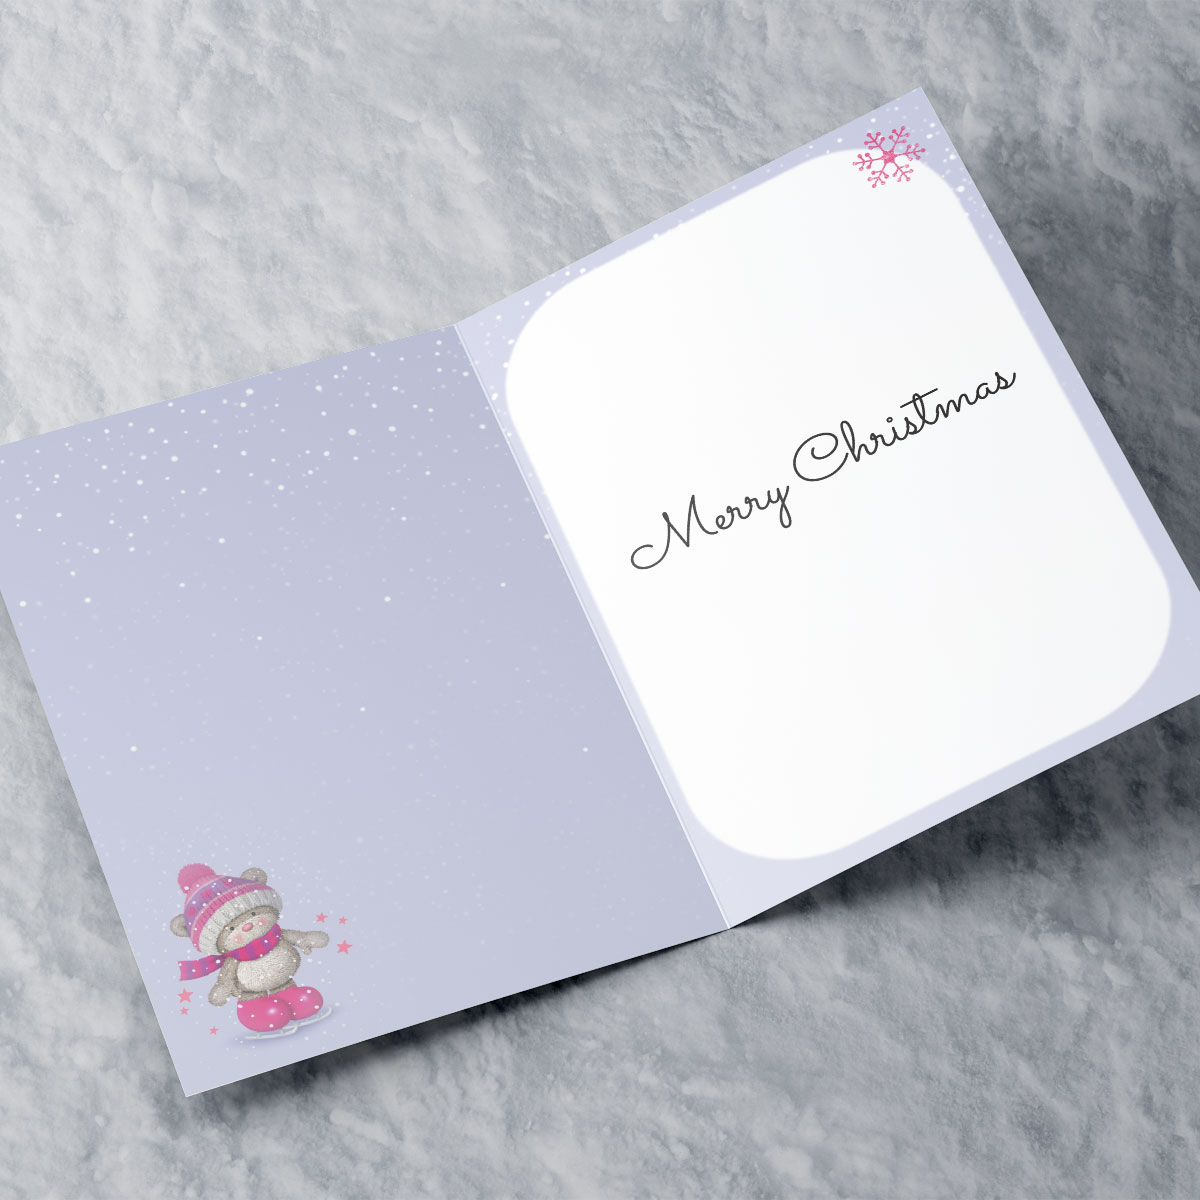 Hugs Photo Christmas Card - Pink Ice Skating